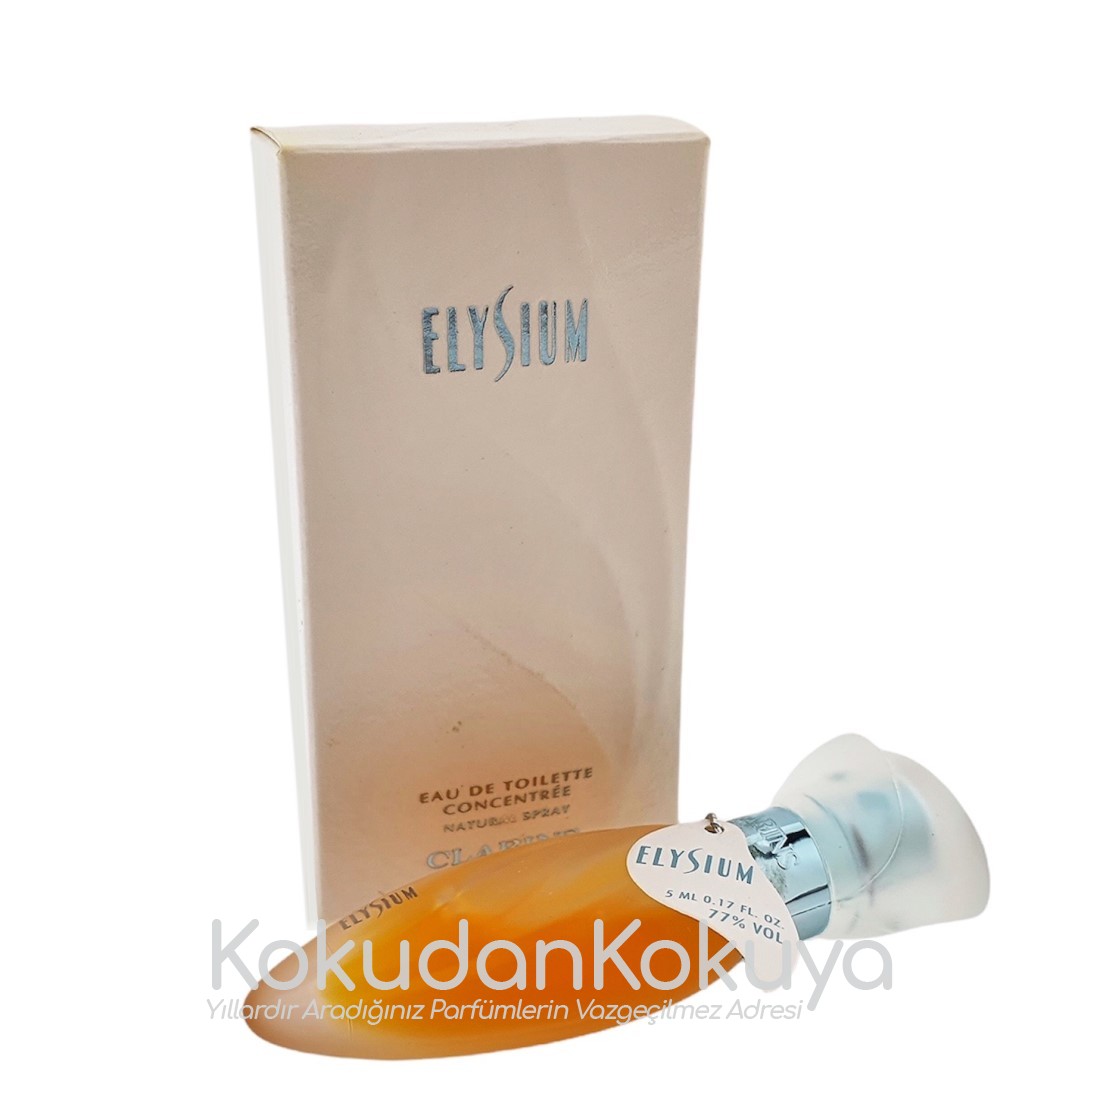 CLARINS Elysium (Vintage) Parfüm Kadın 5ml Minyatür (Mini Perfume) Sprey 